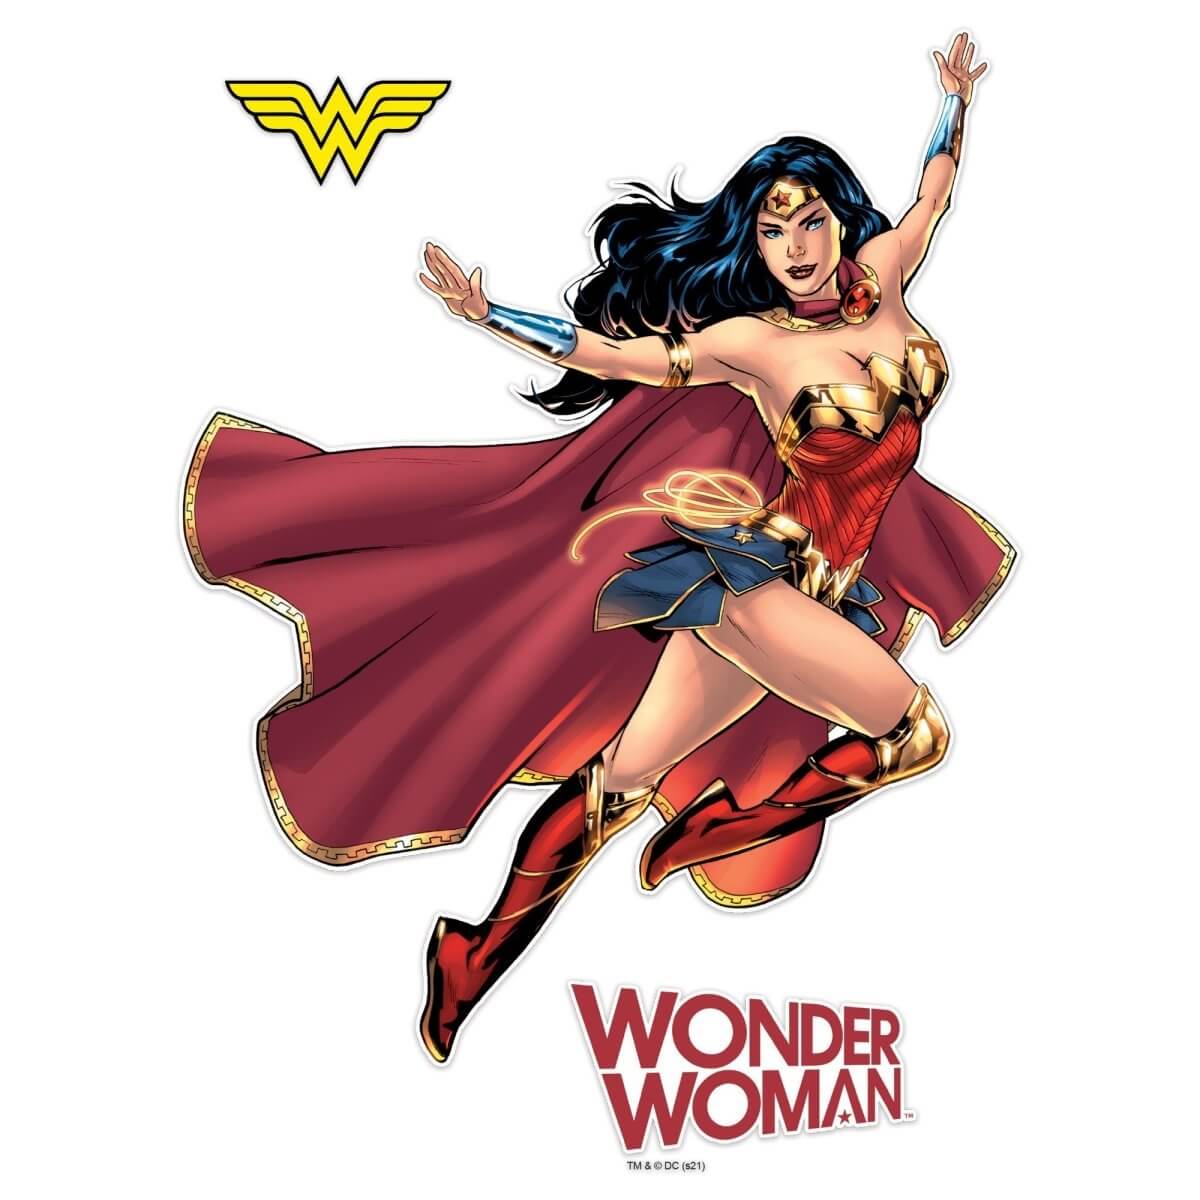 Kismet Decals Evolution of Wonder Woman Original Artwork 2016 Officially Licensed Wall Sticker - Easy DIY DC Comics Home, Kids or Adult Bedroom, Office, Living Room Decor Wall Art - Kismet Decals